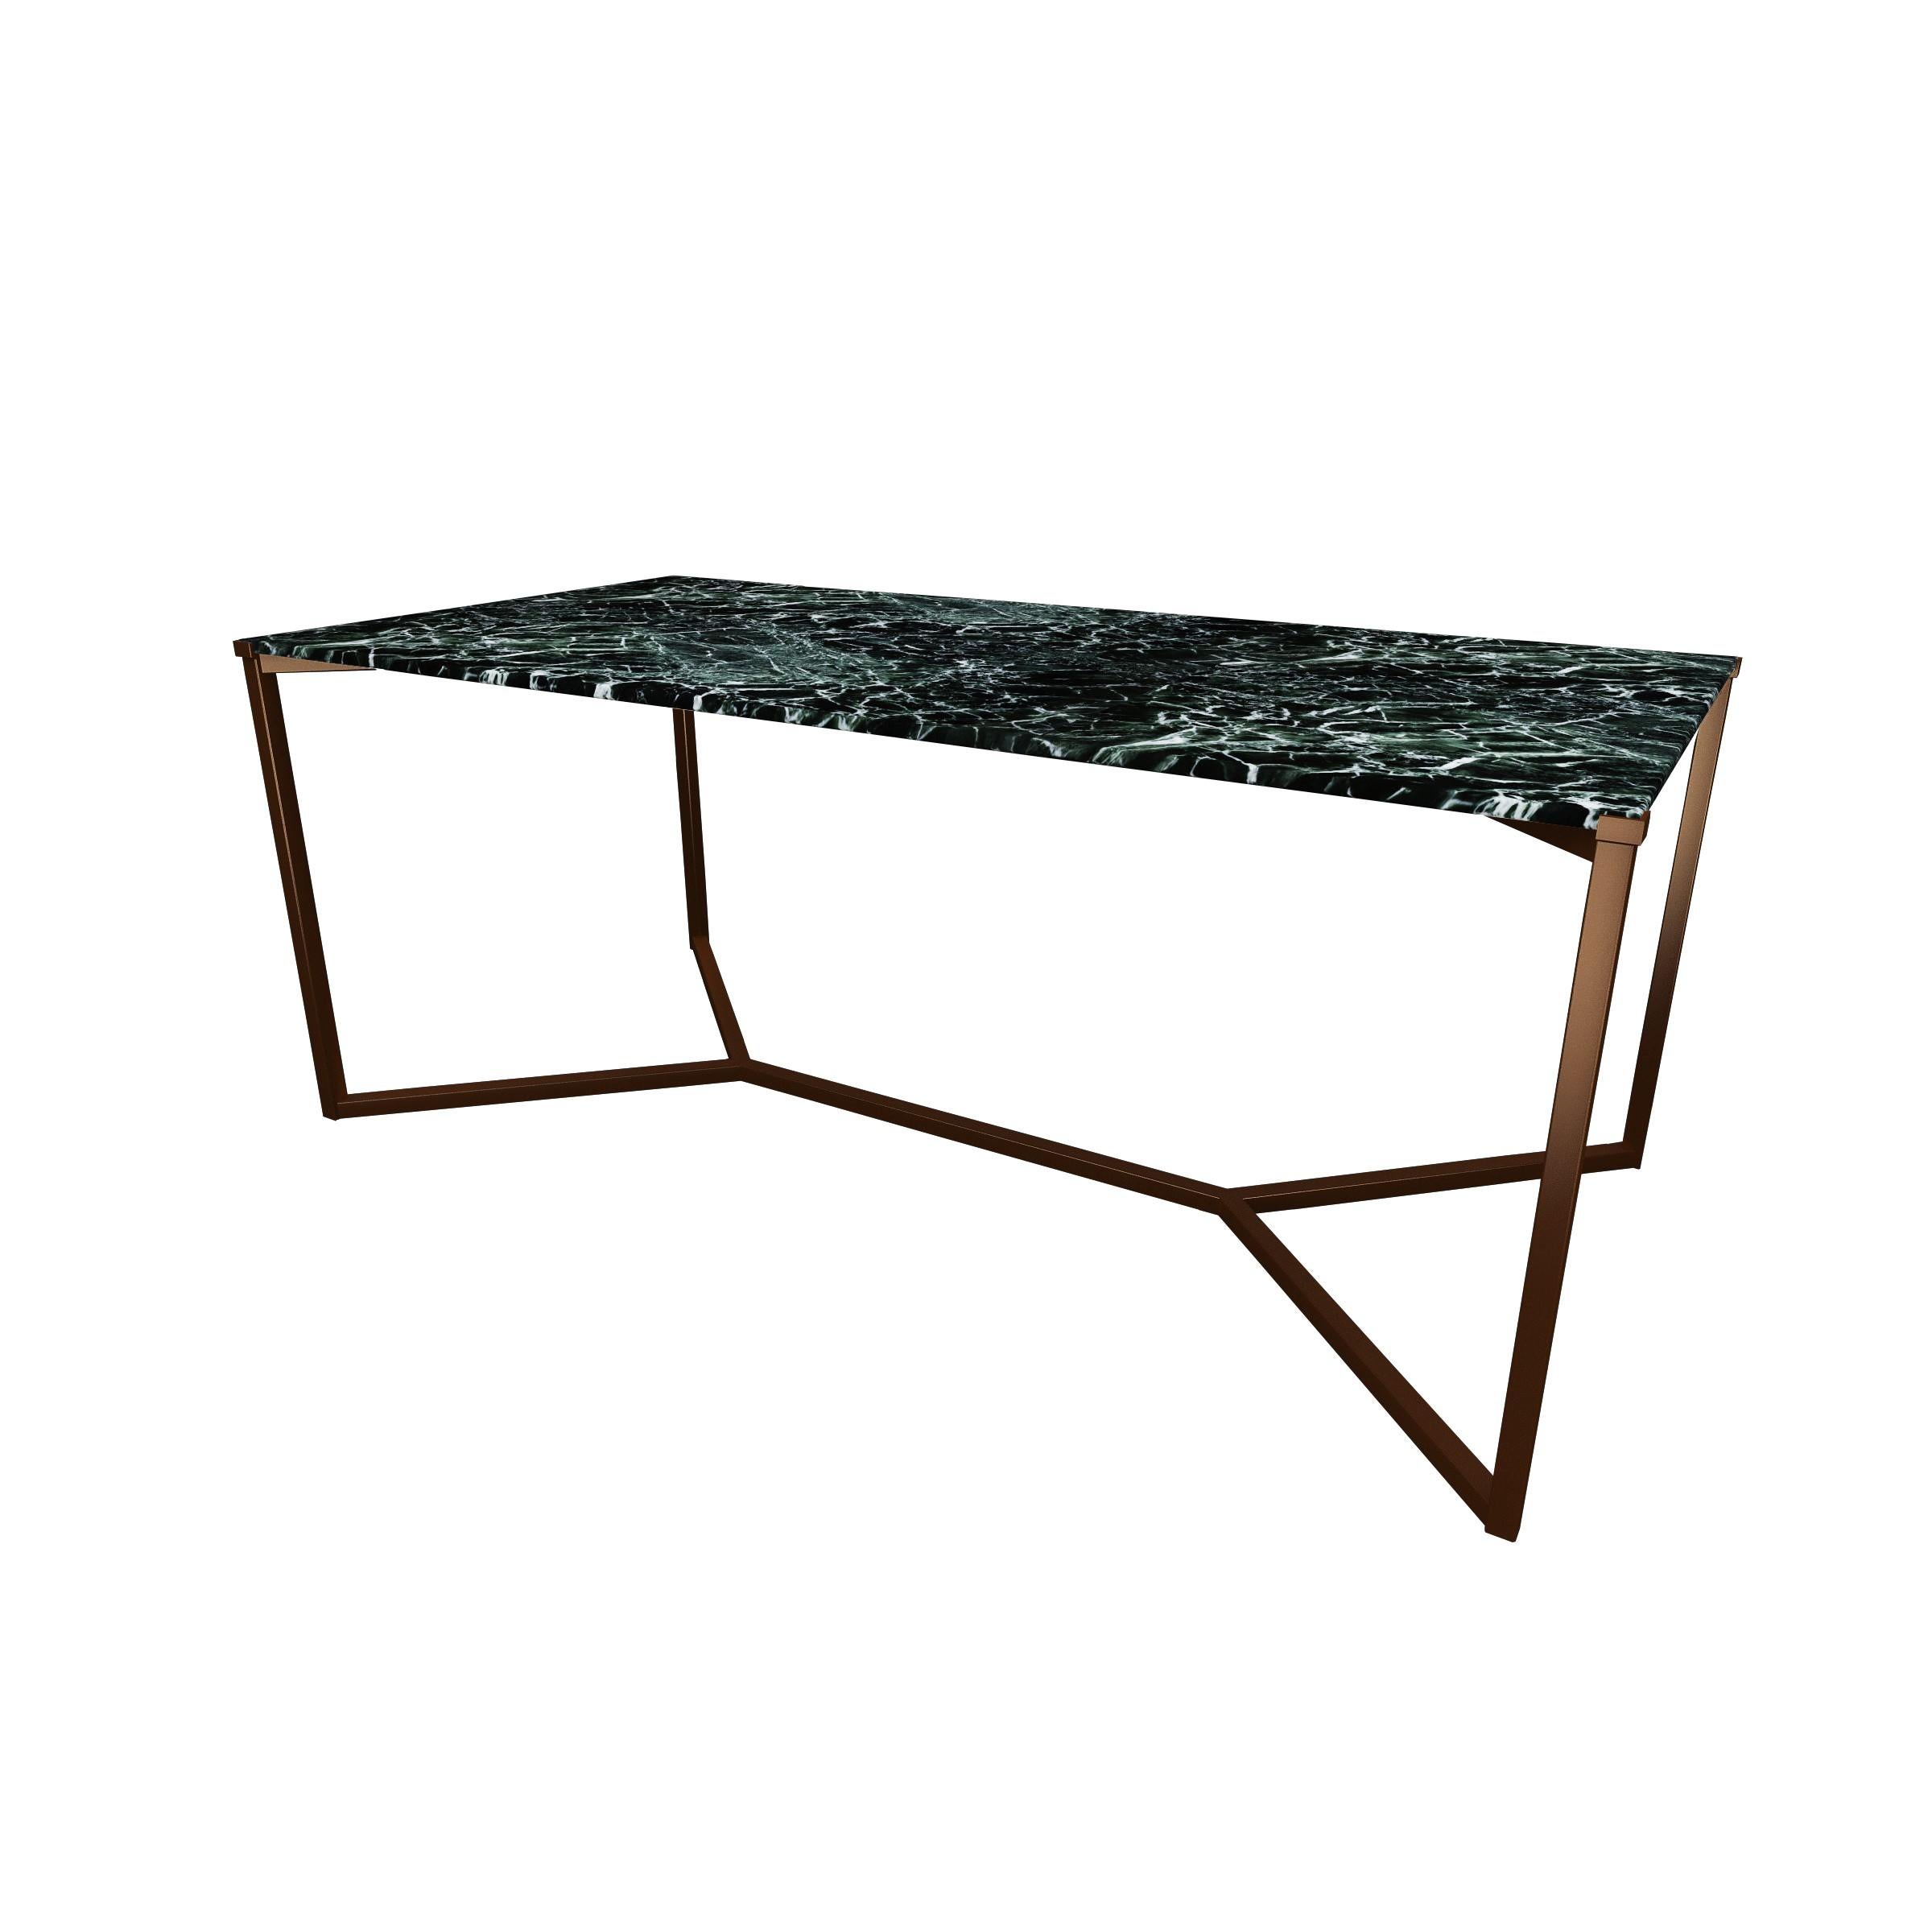 Scandinavian Modern NORDST TEDDY Dining Table, Italian Black Eagle Marble, Danish Modern Design, New For Sale